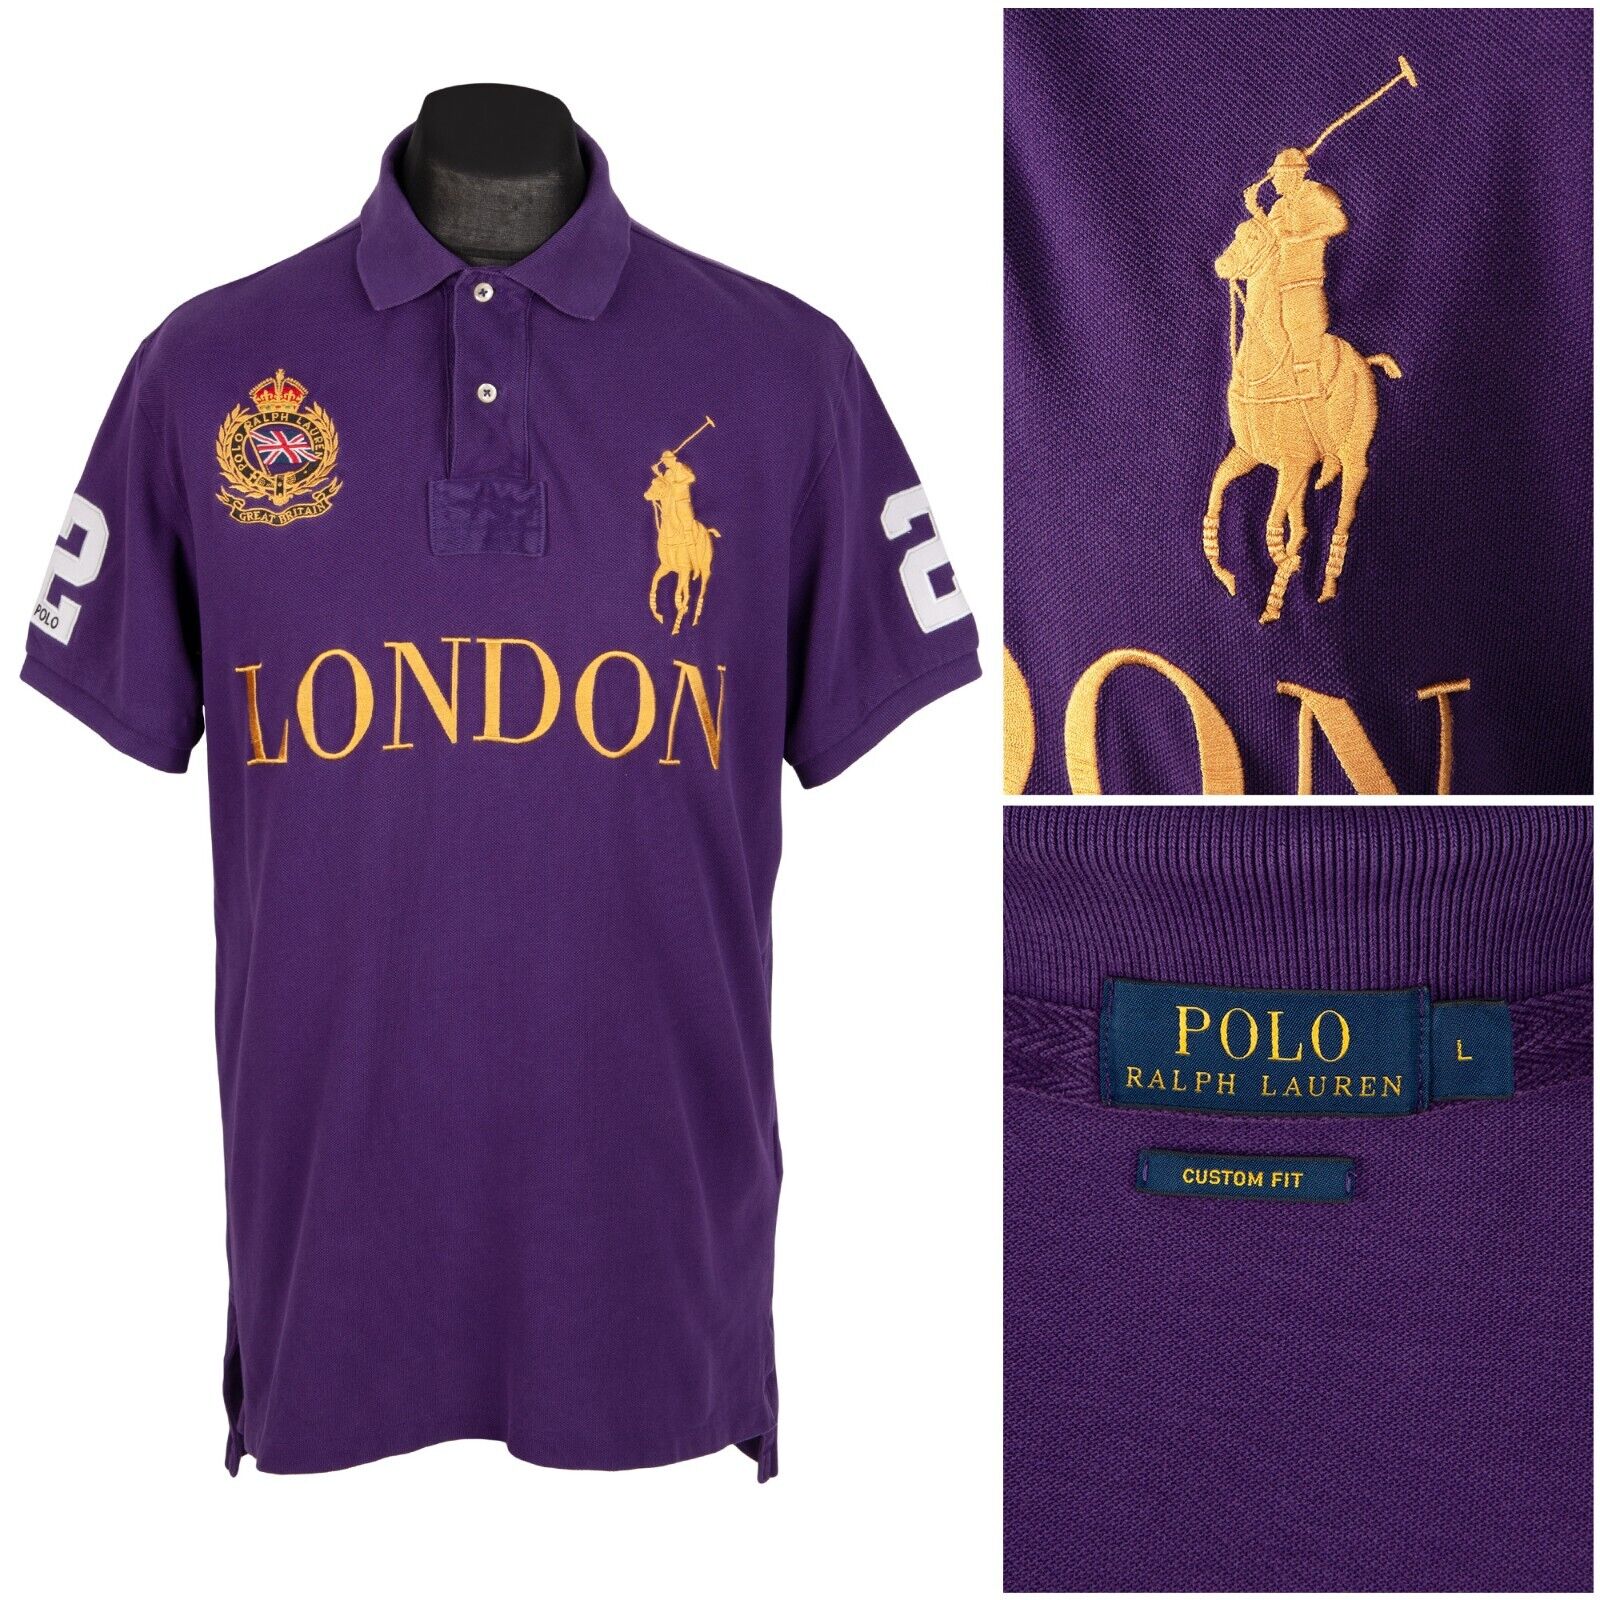 POLO RALPH LAUREN London Polo Shirt Purple Cotton Mens Big Pony